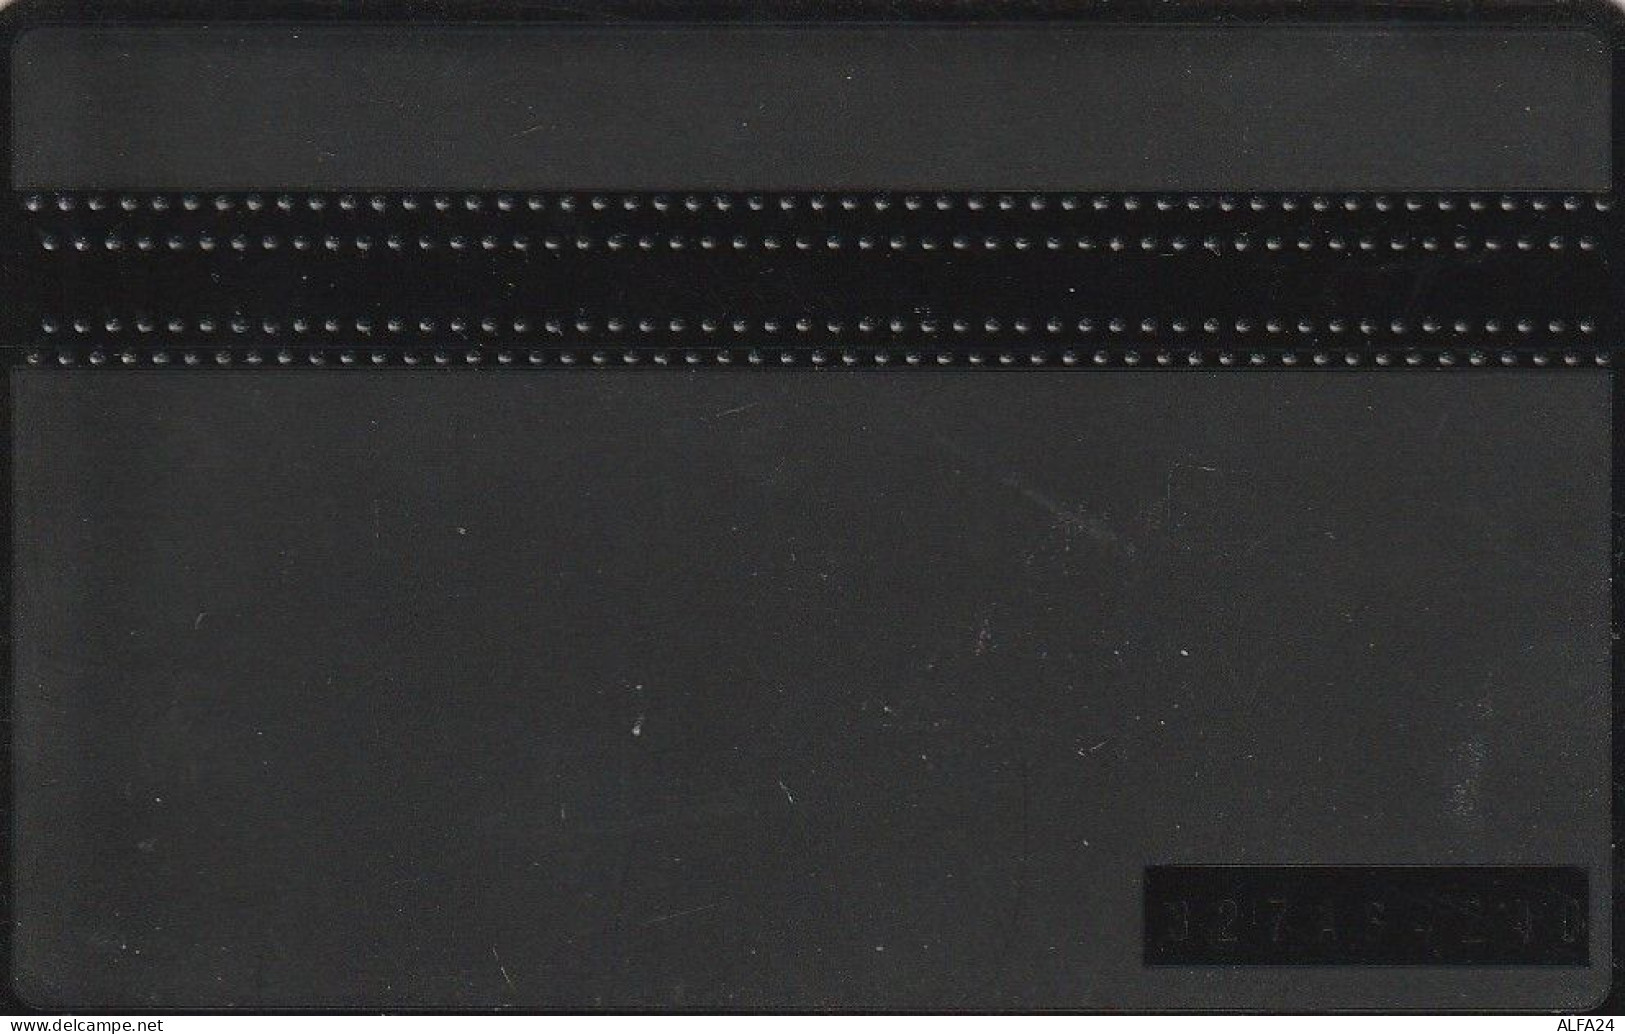 PHONE CARD BELGIO LG (CV6601 - Senza Chip